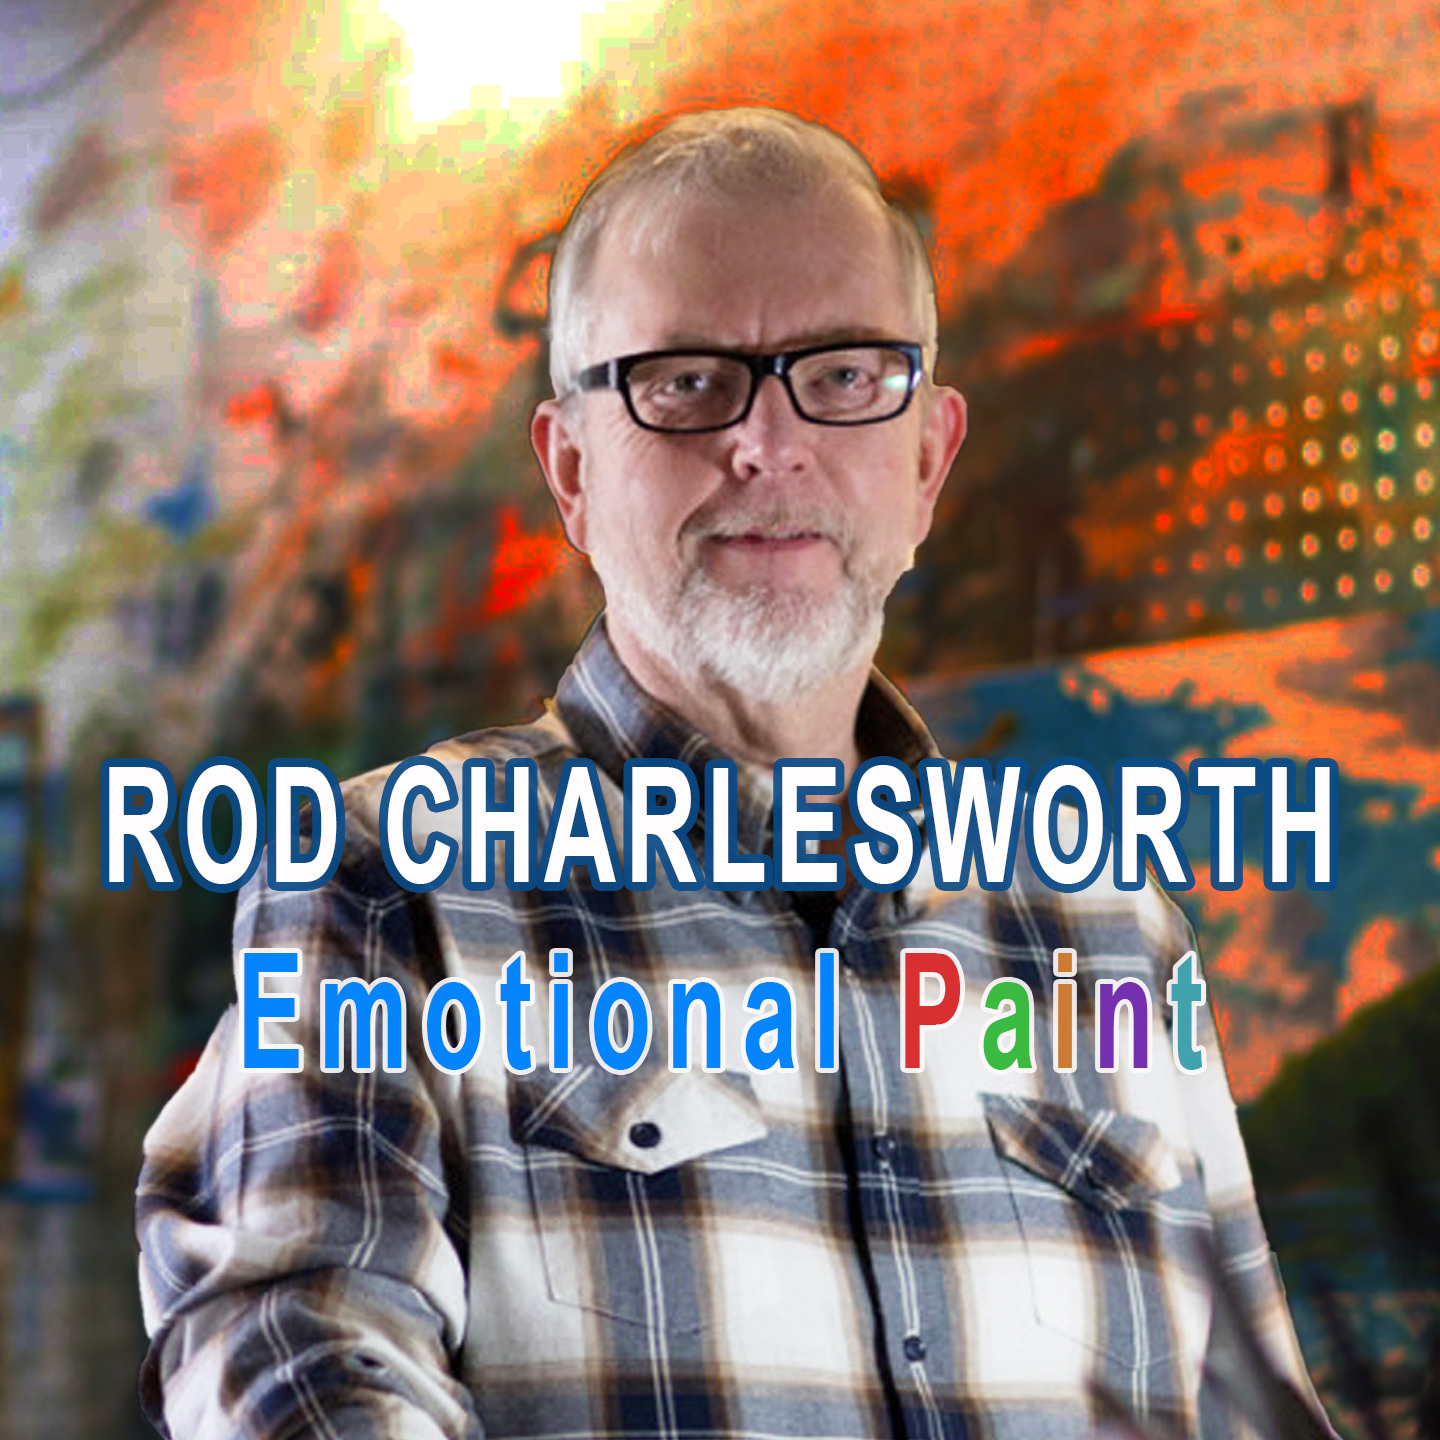 Rod Charlesworth